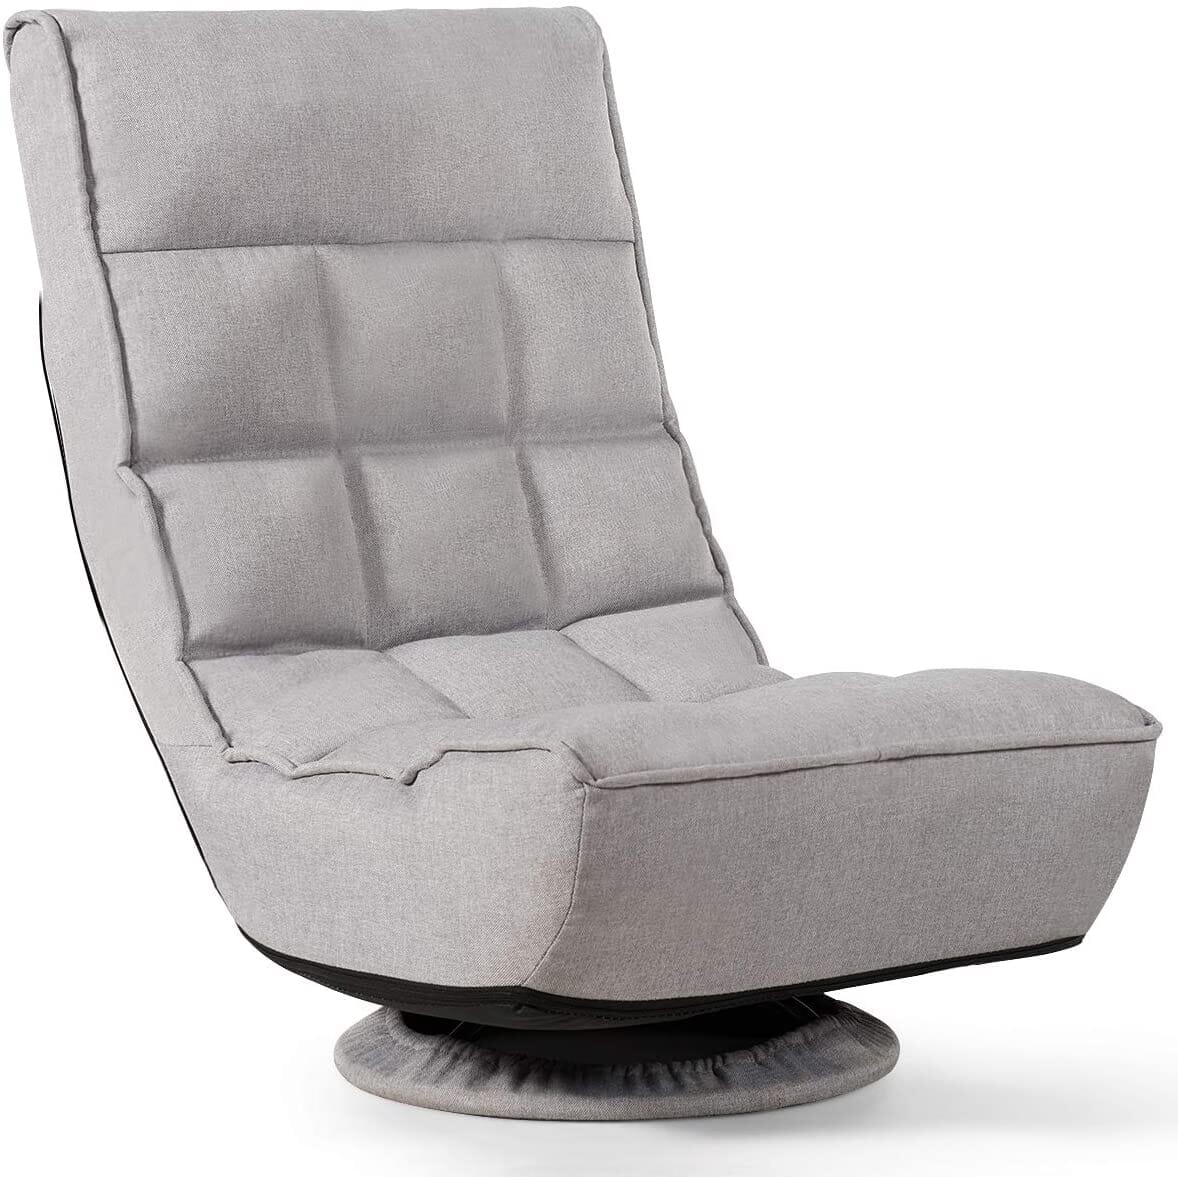 Giantex 360 Degree Swivel Gaming Chair, 4-Position Adjustable Folding